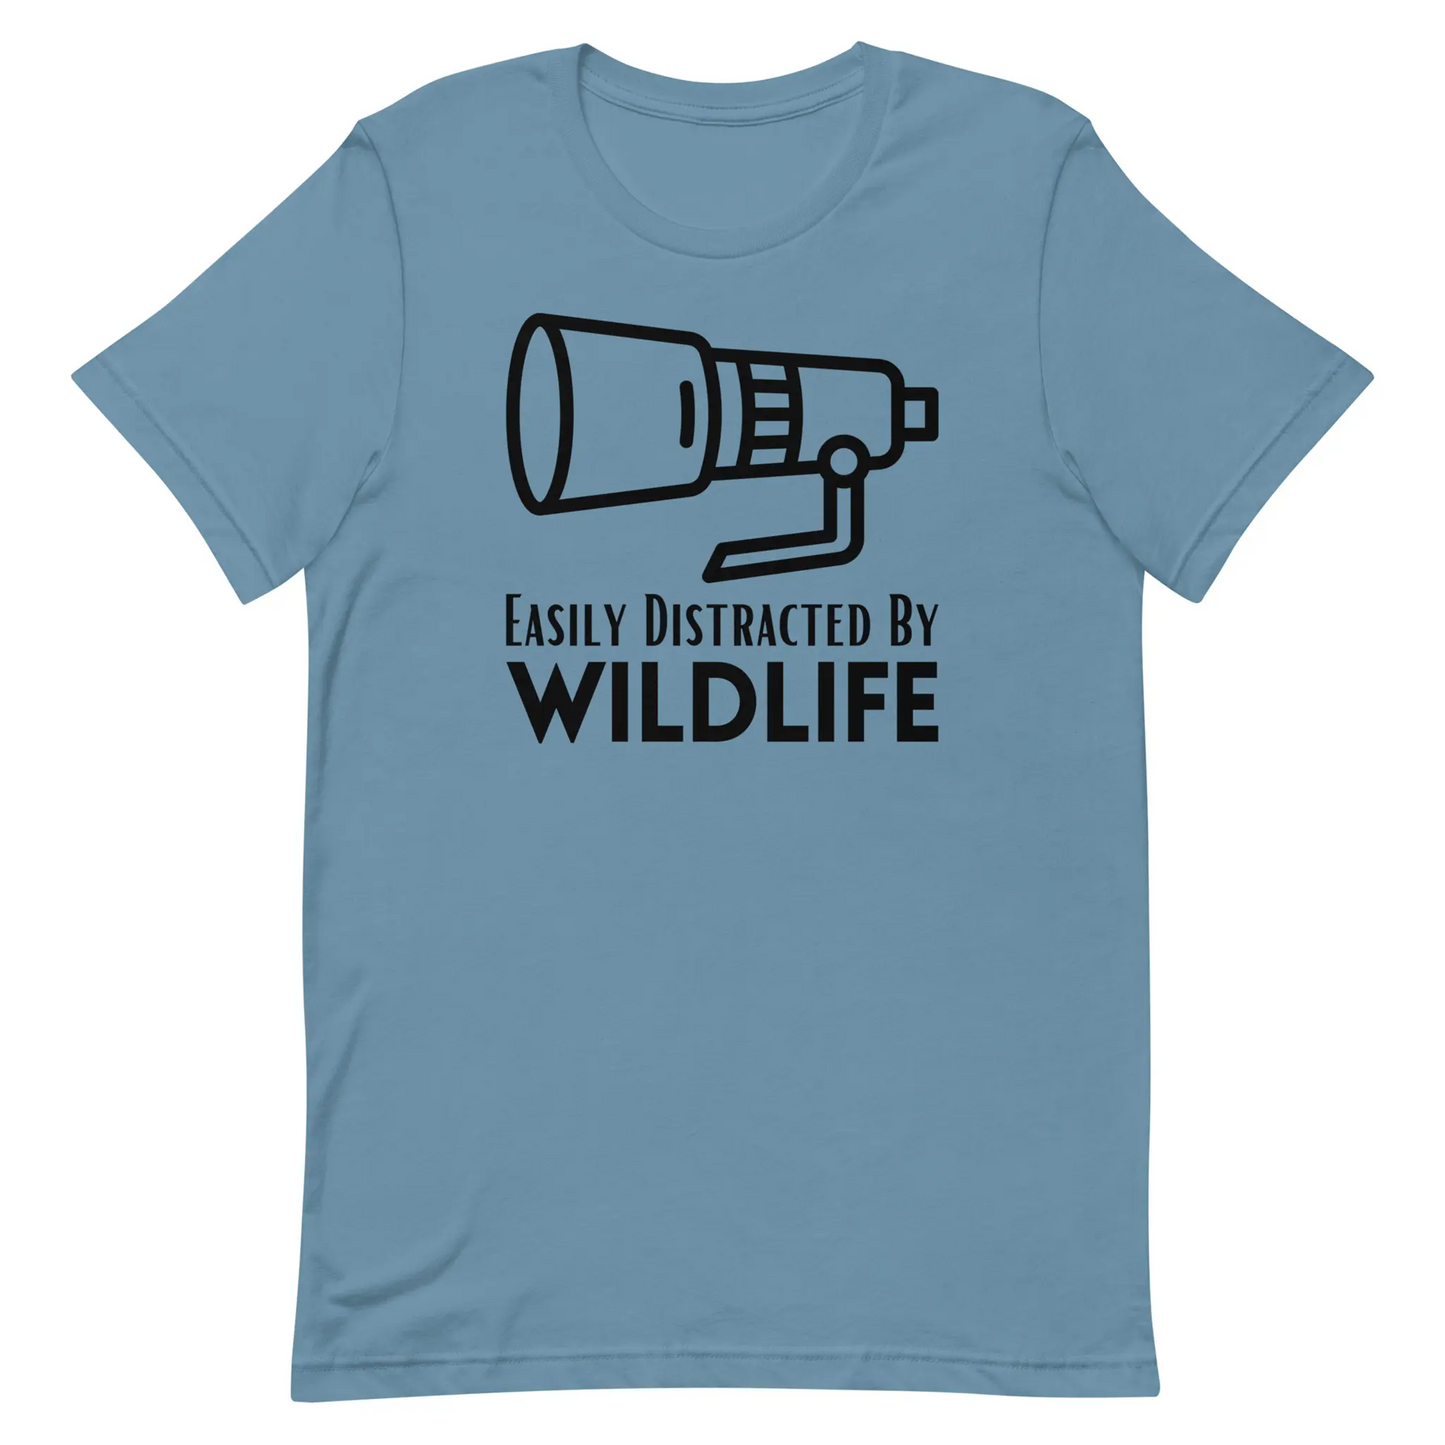 Steel Blue Wildlife Photographer T-Shirt.